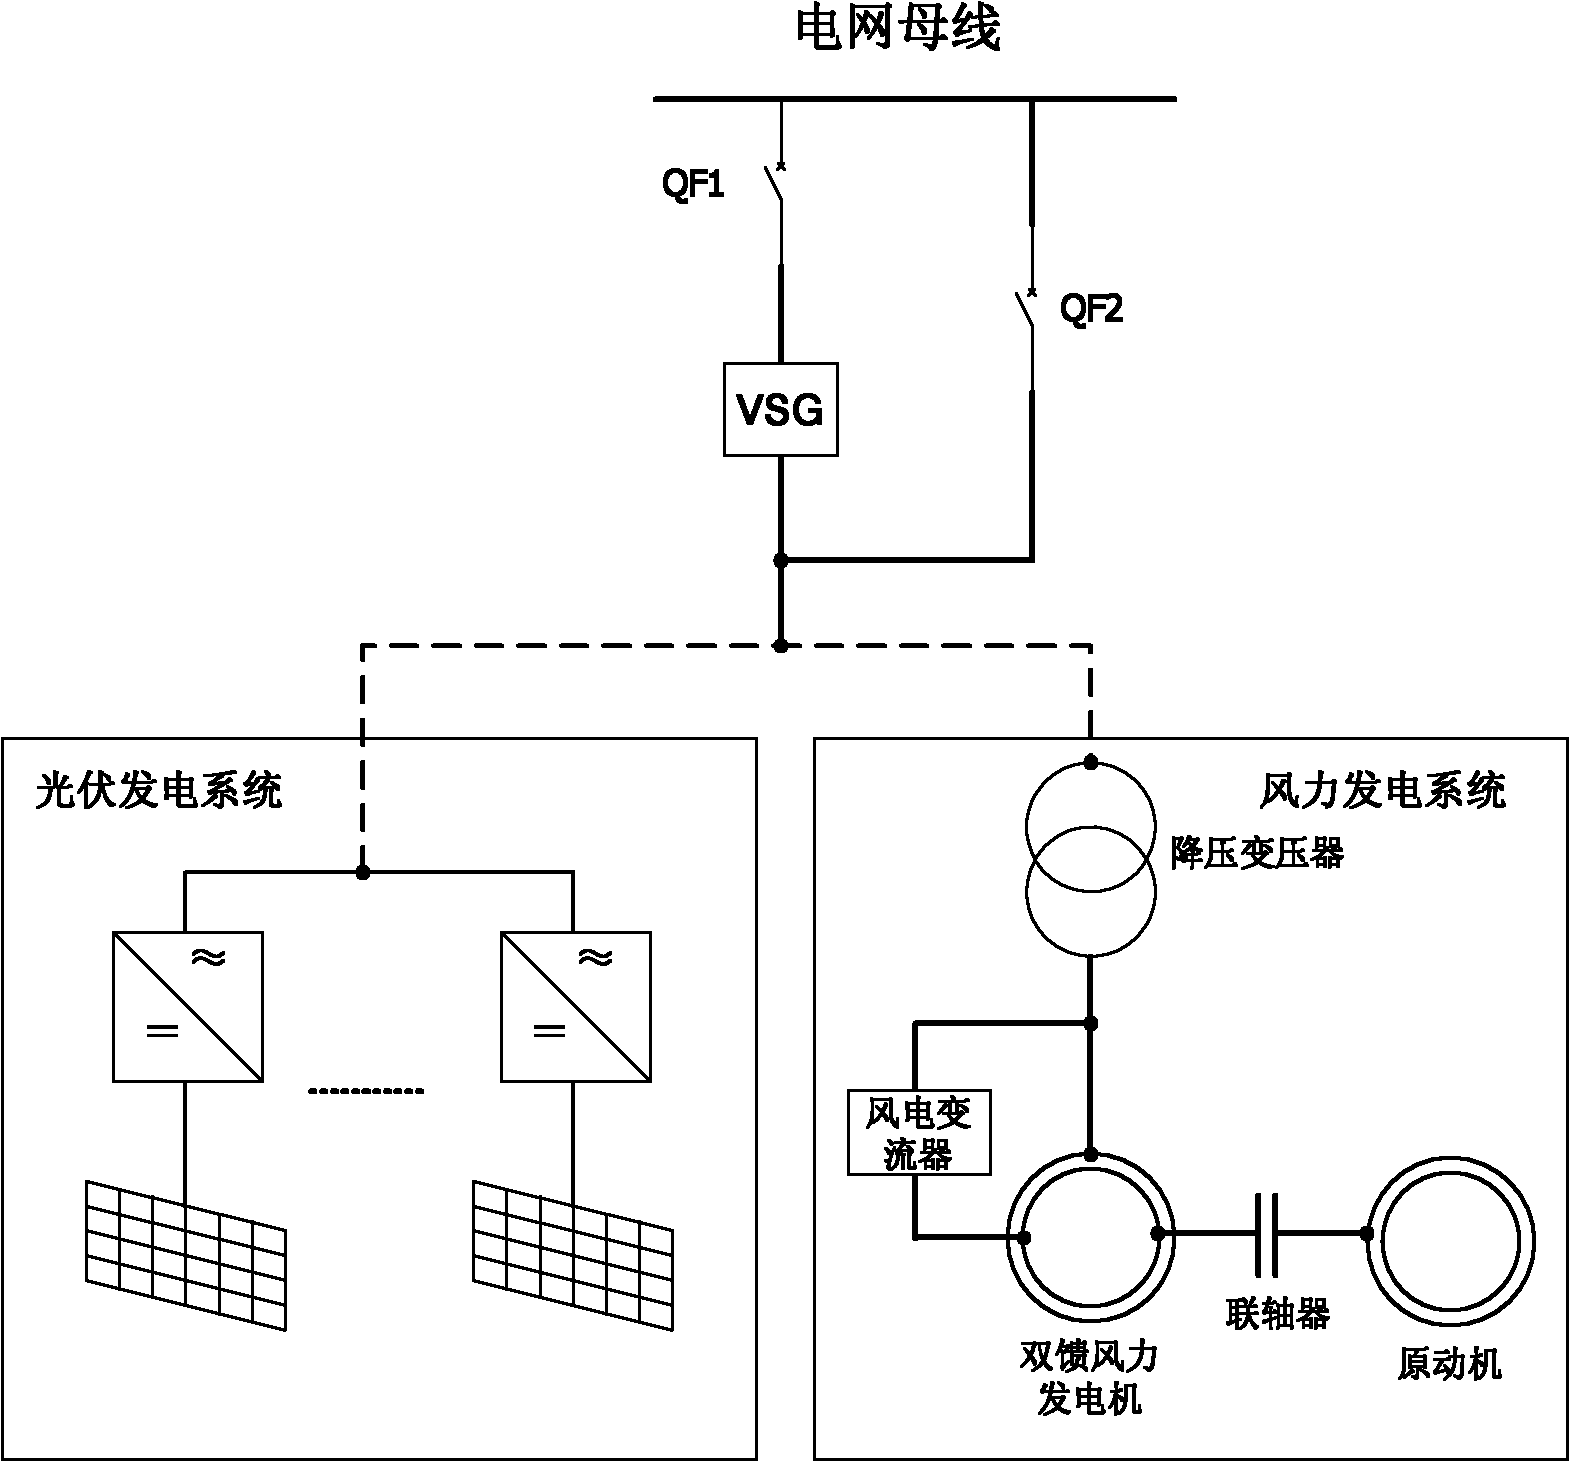 H-bridge cascaded multilevel voltage sag generator based on insulated gate bipolar transistor (IGBT)